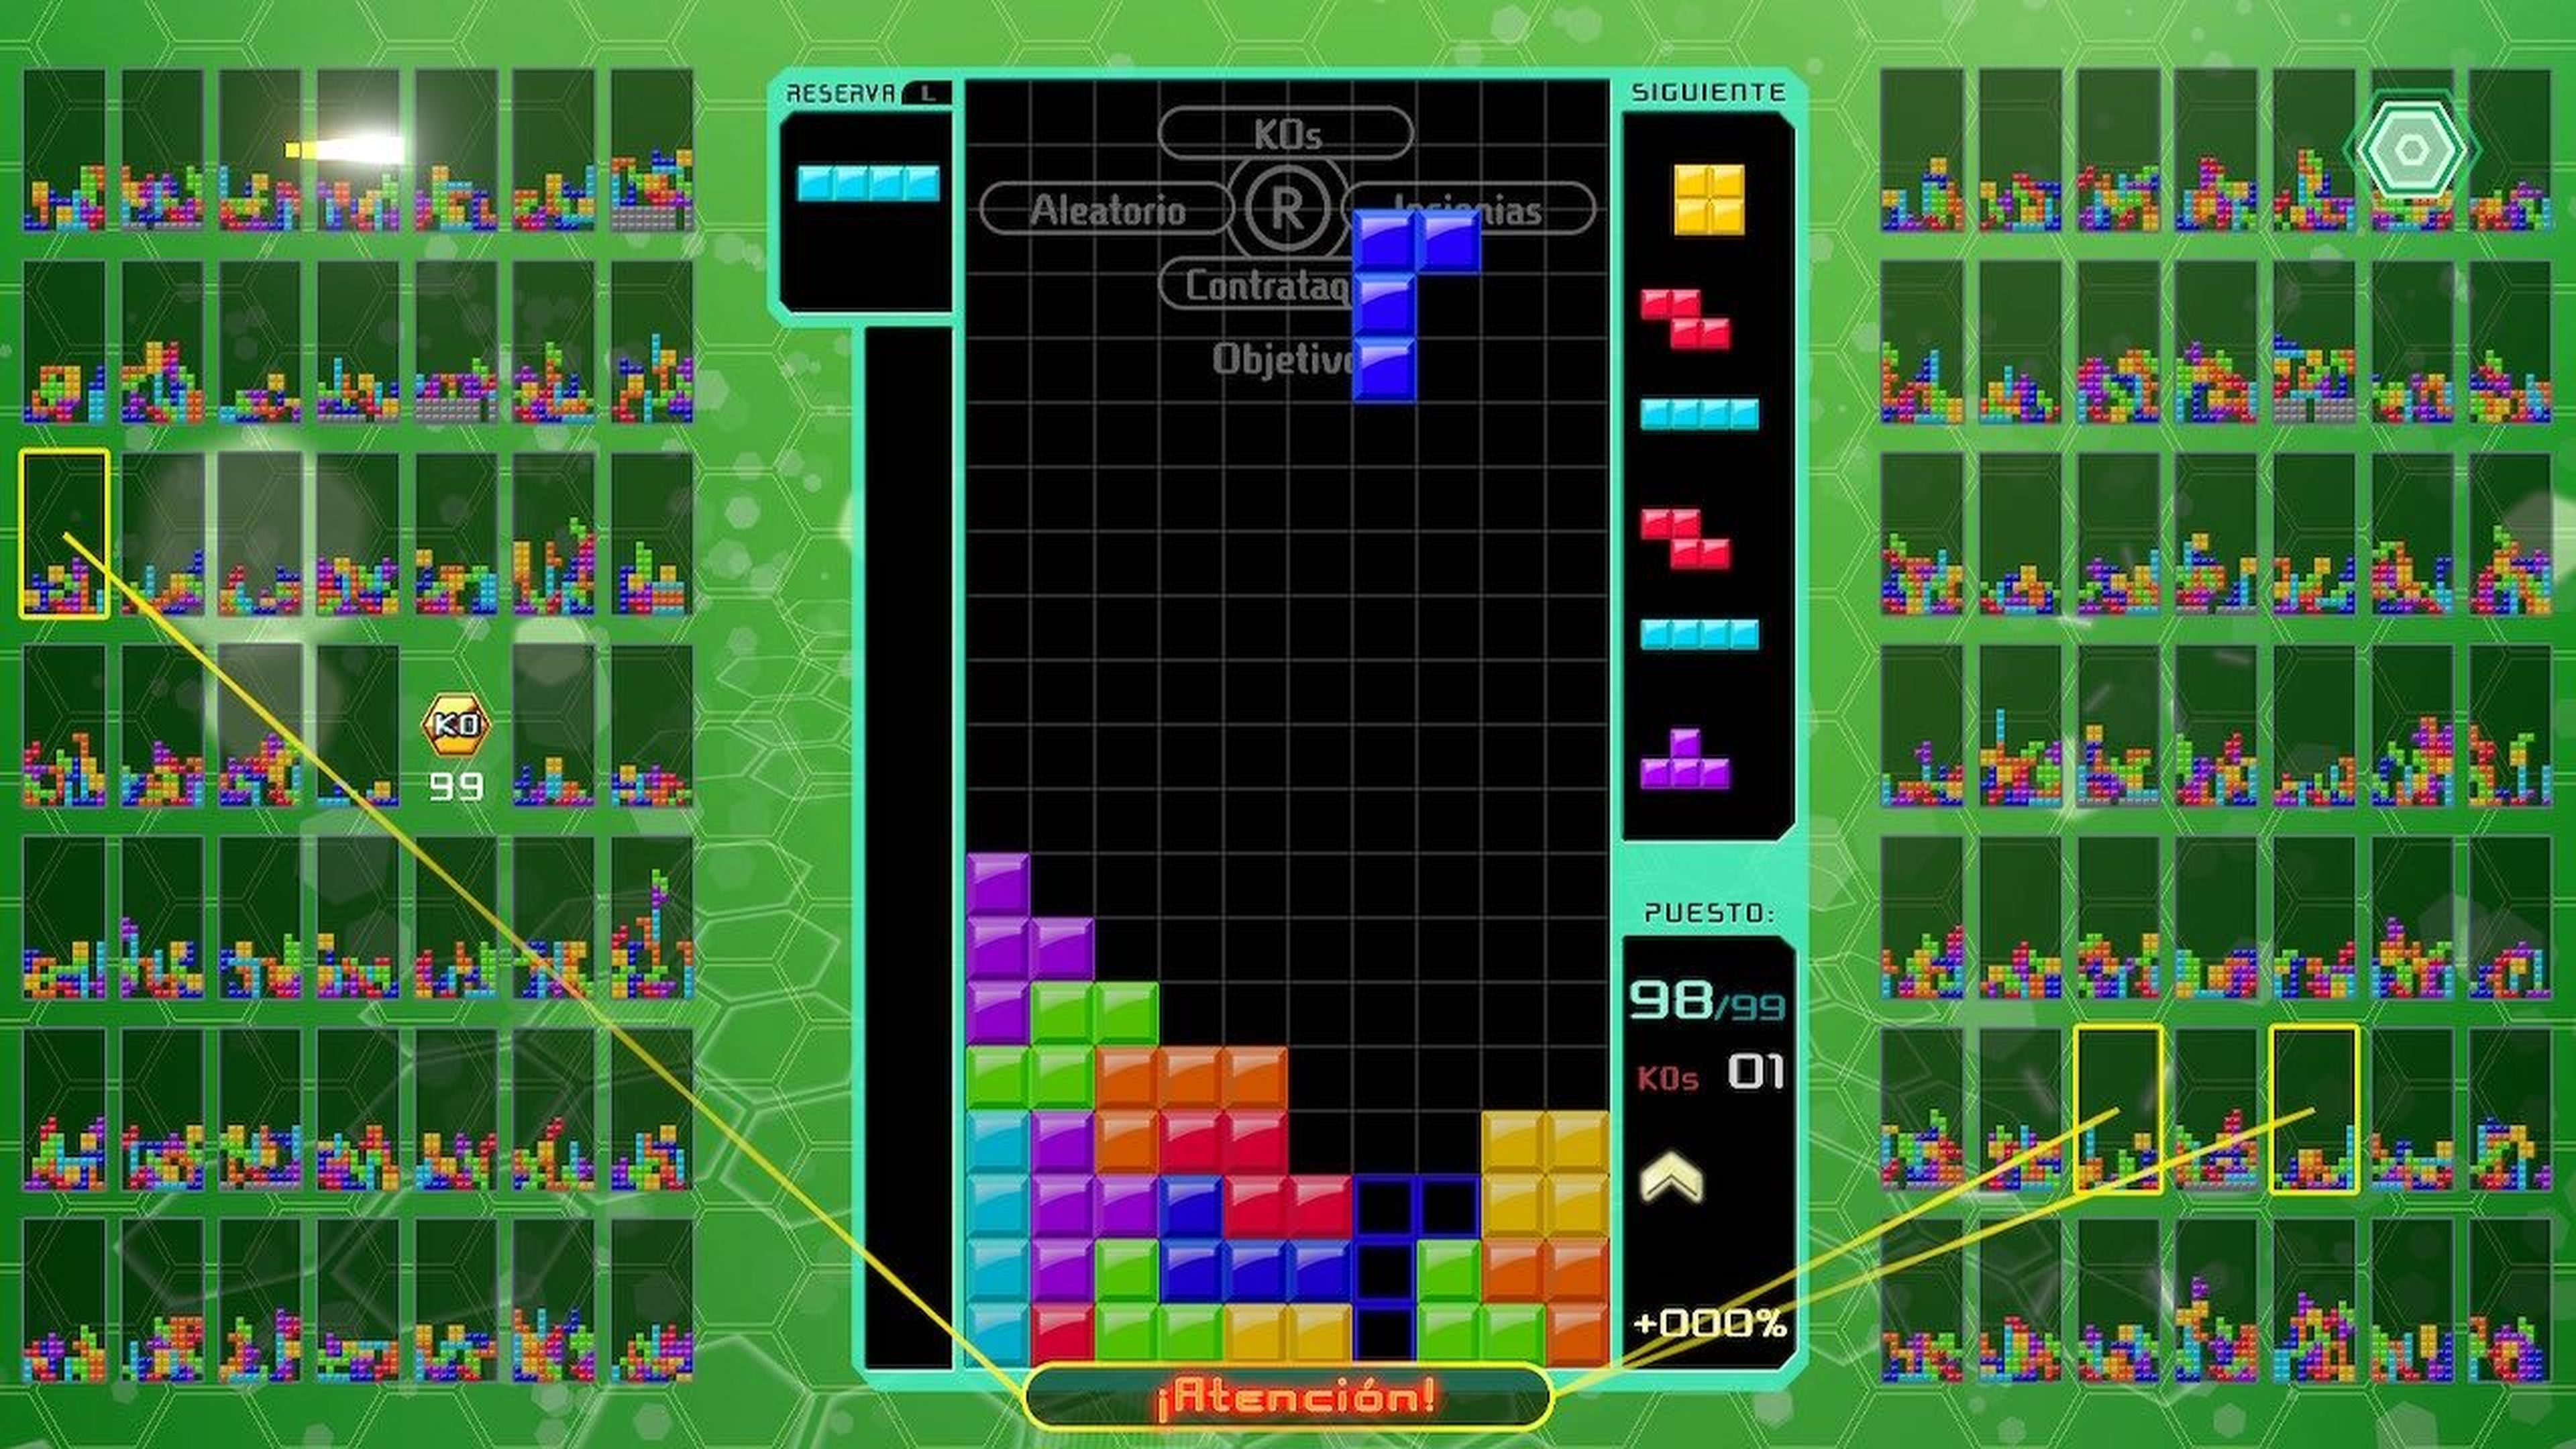 tetris 99 big block 6